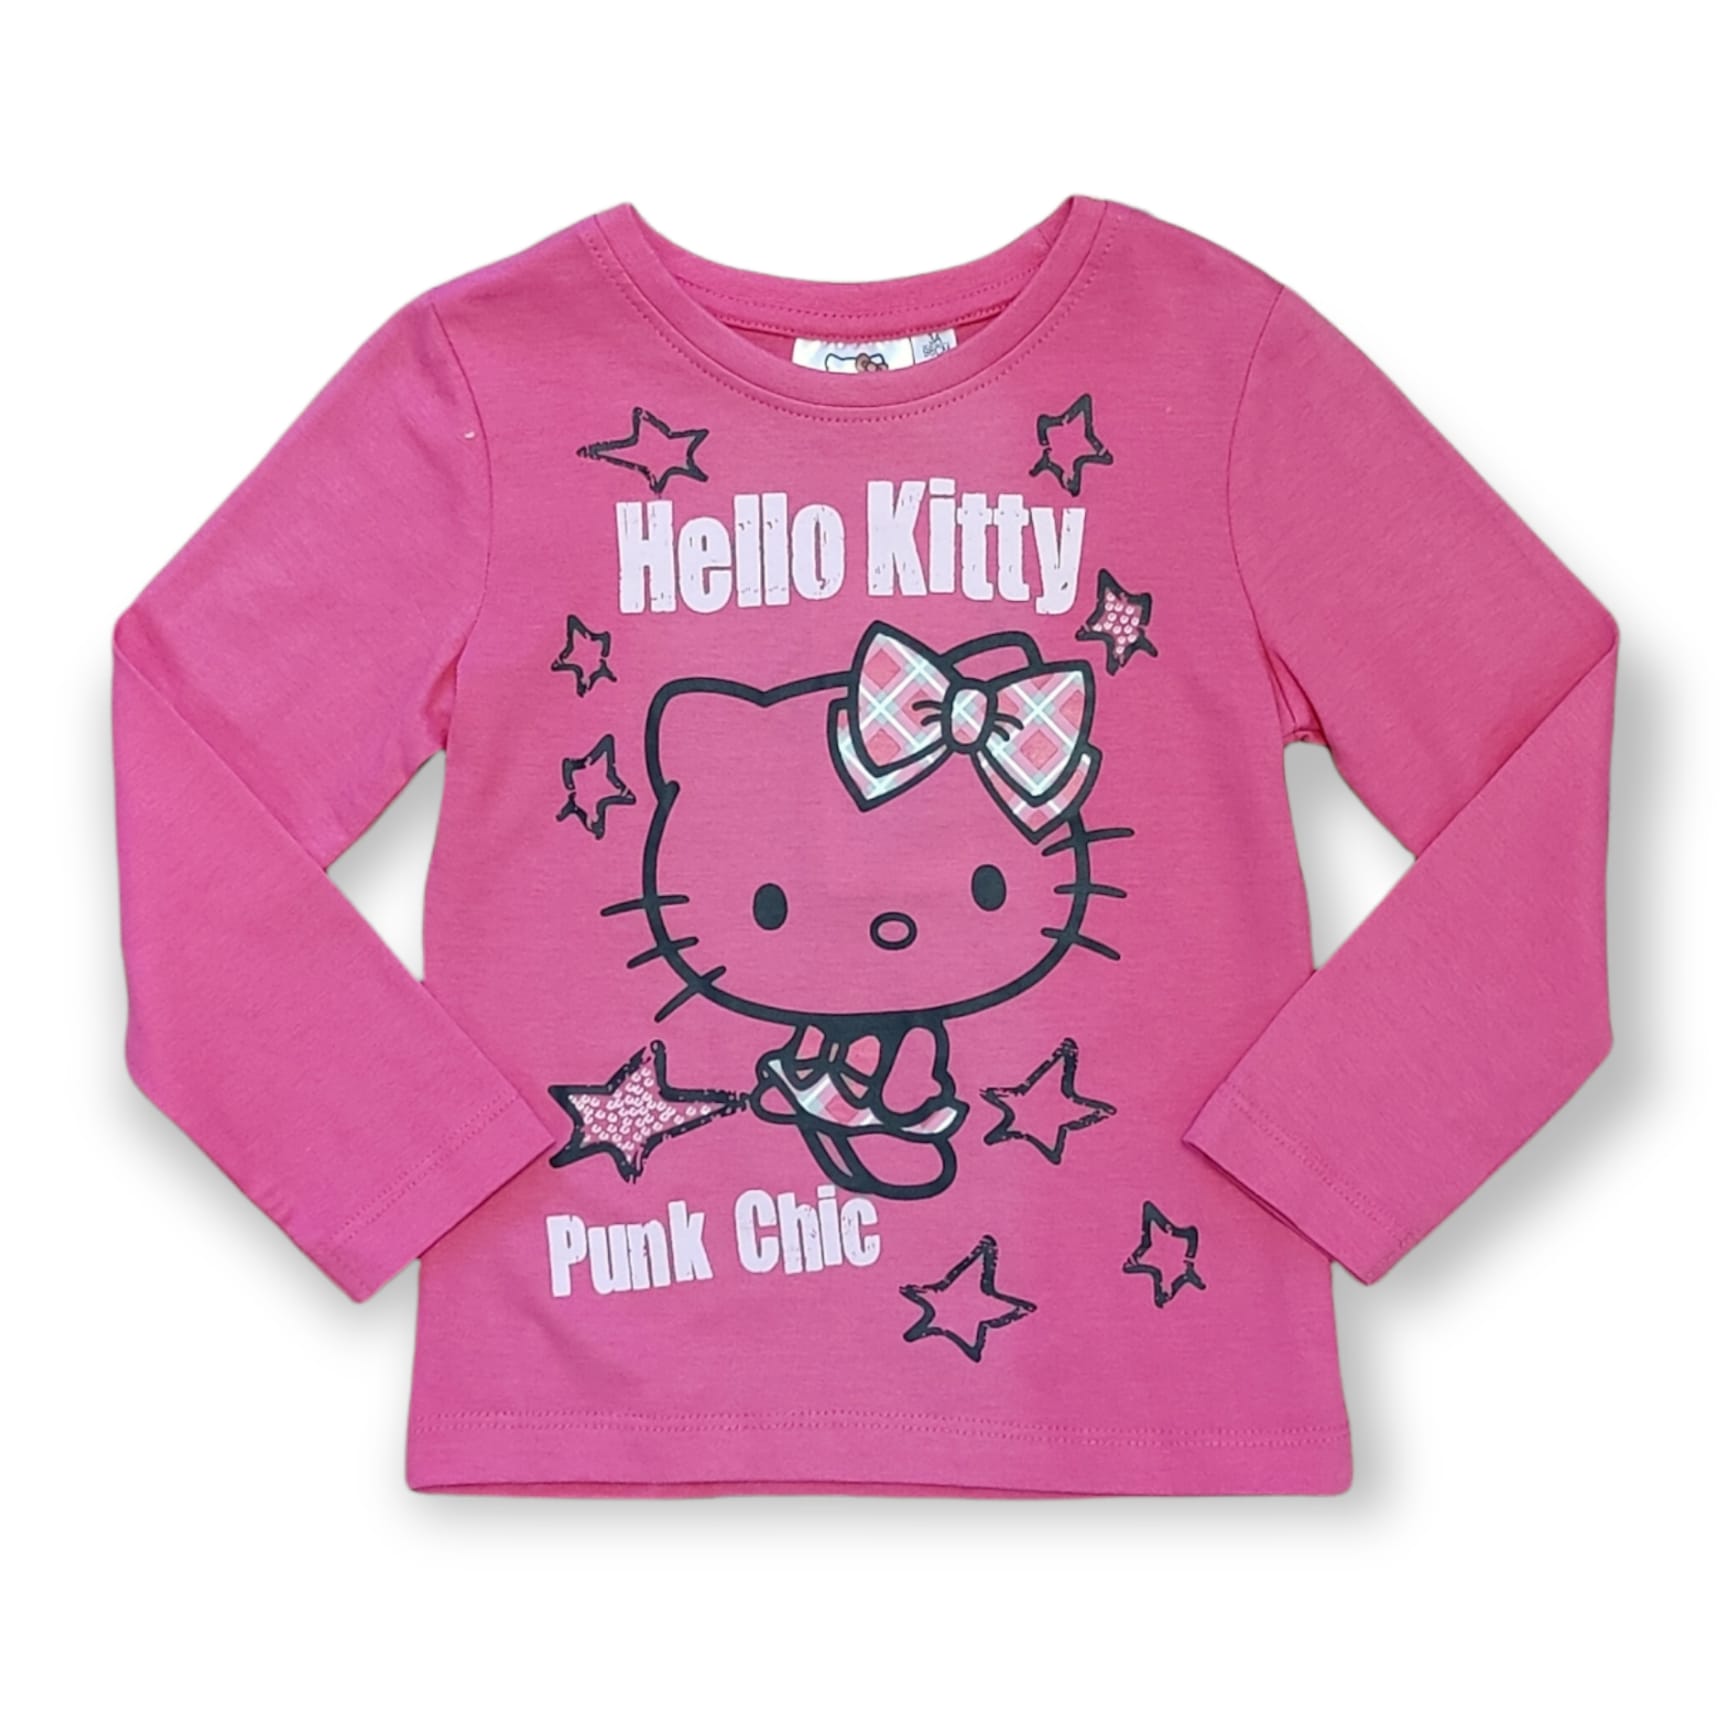 Sanrio Hello Kitty Langarm Shirt Pink